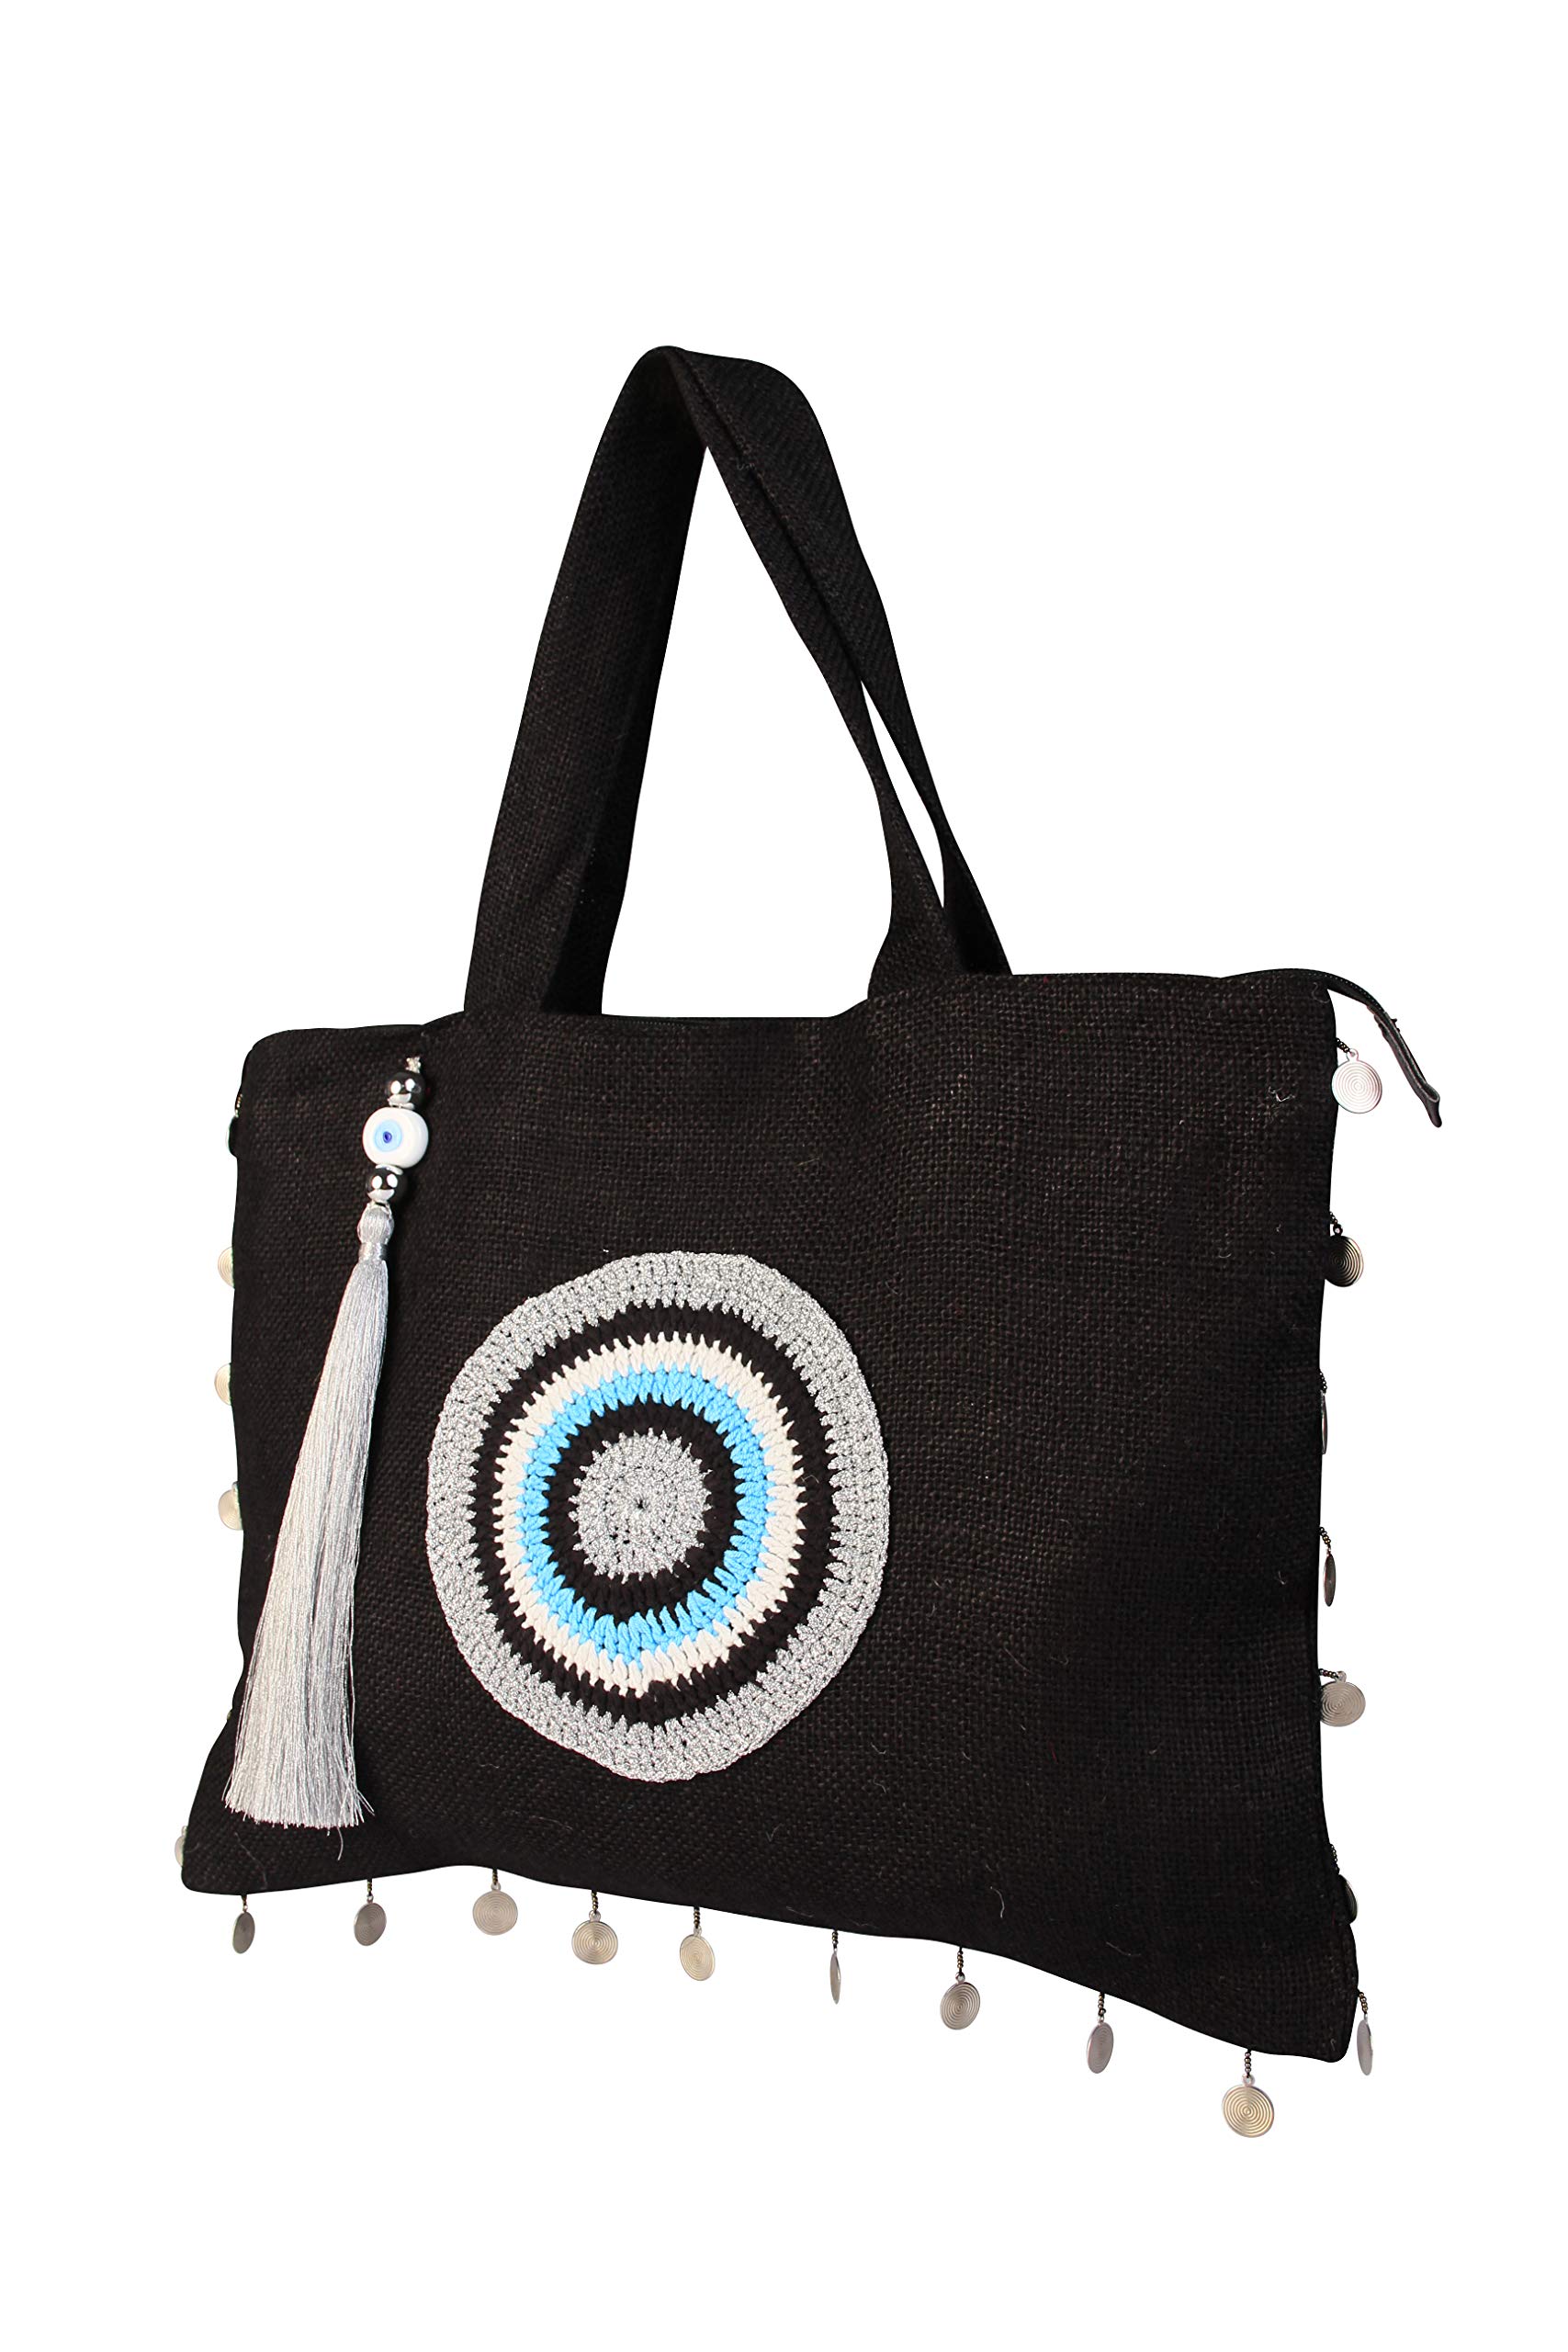 KarensLine Handmade Oversize Evil Eye Black- Silver Jute Handbag Tote Beach Bag Zipper Gift Bag with Crystals and Tassels, Large